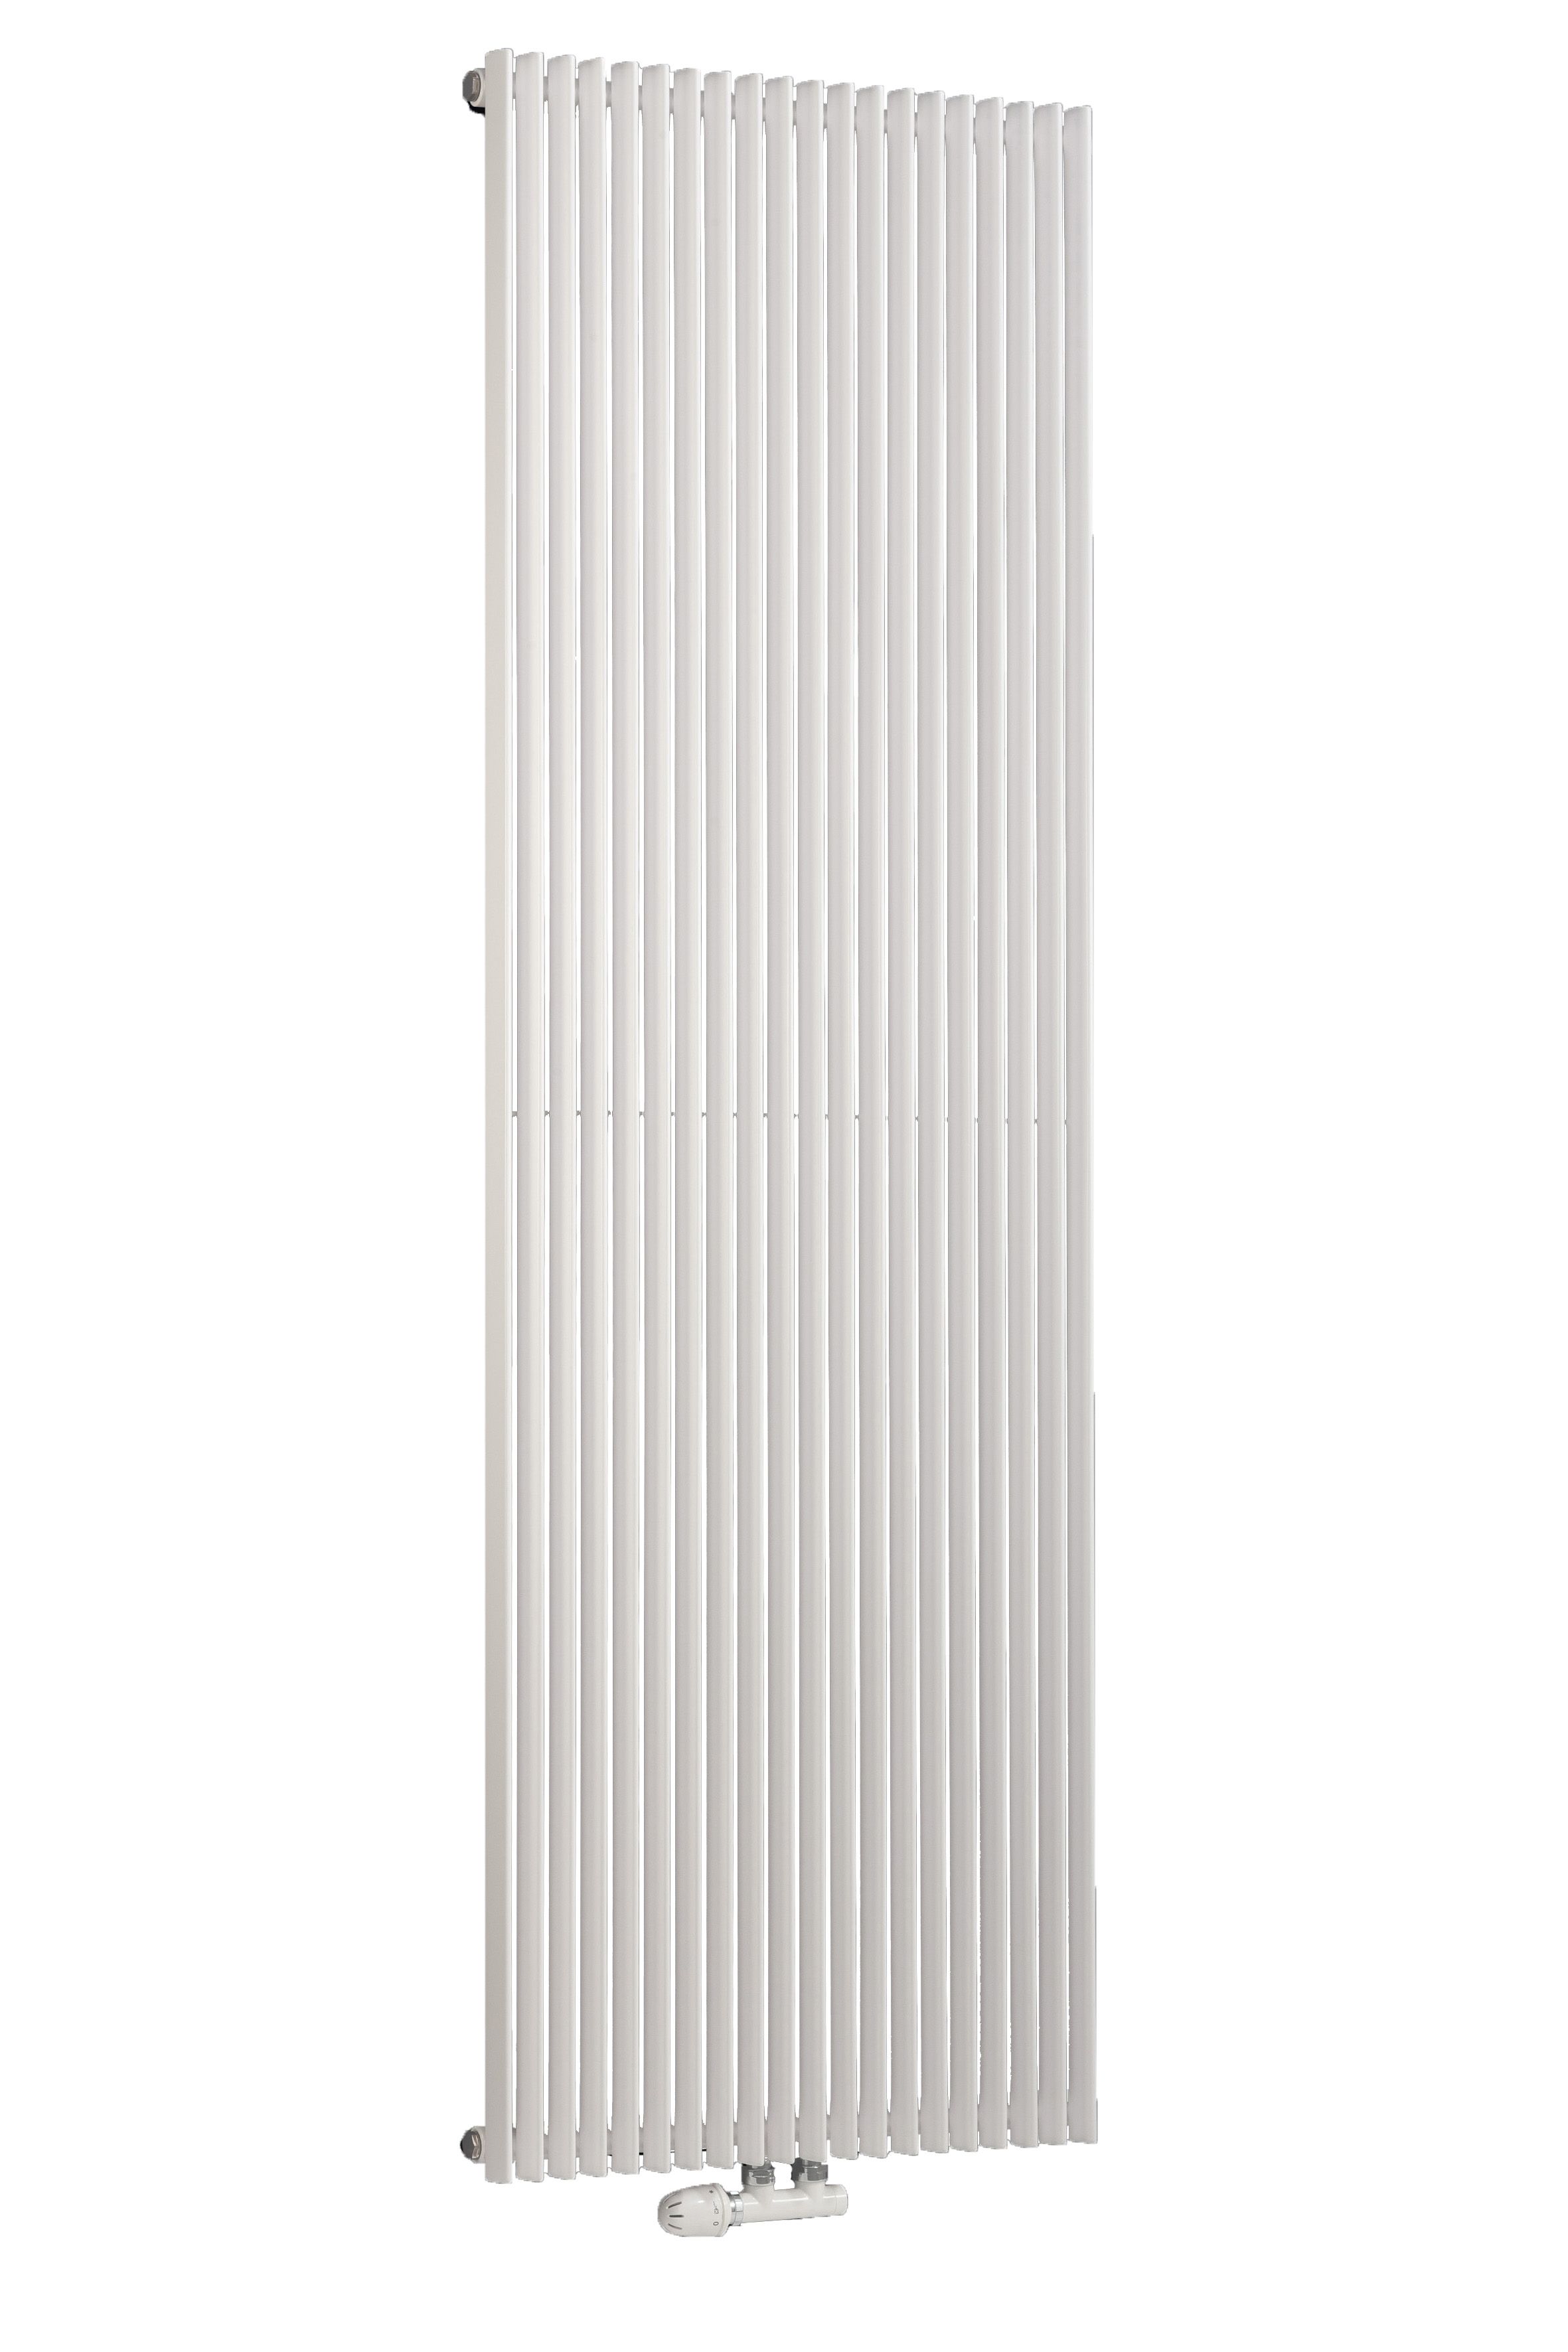 Ximax Triton White Vertical Designer Radiator, (W)450mm x (H)1800mm